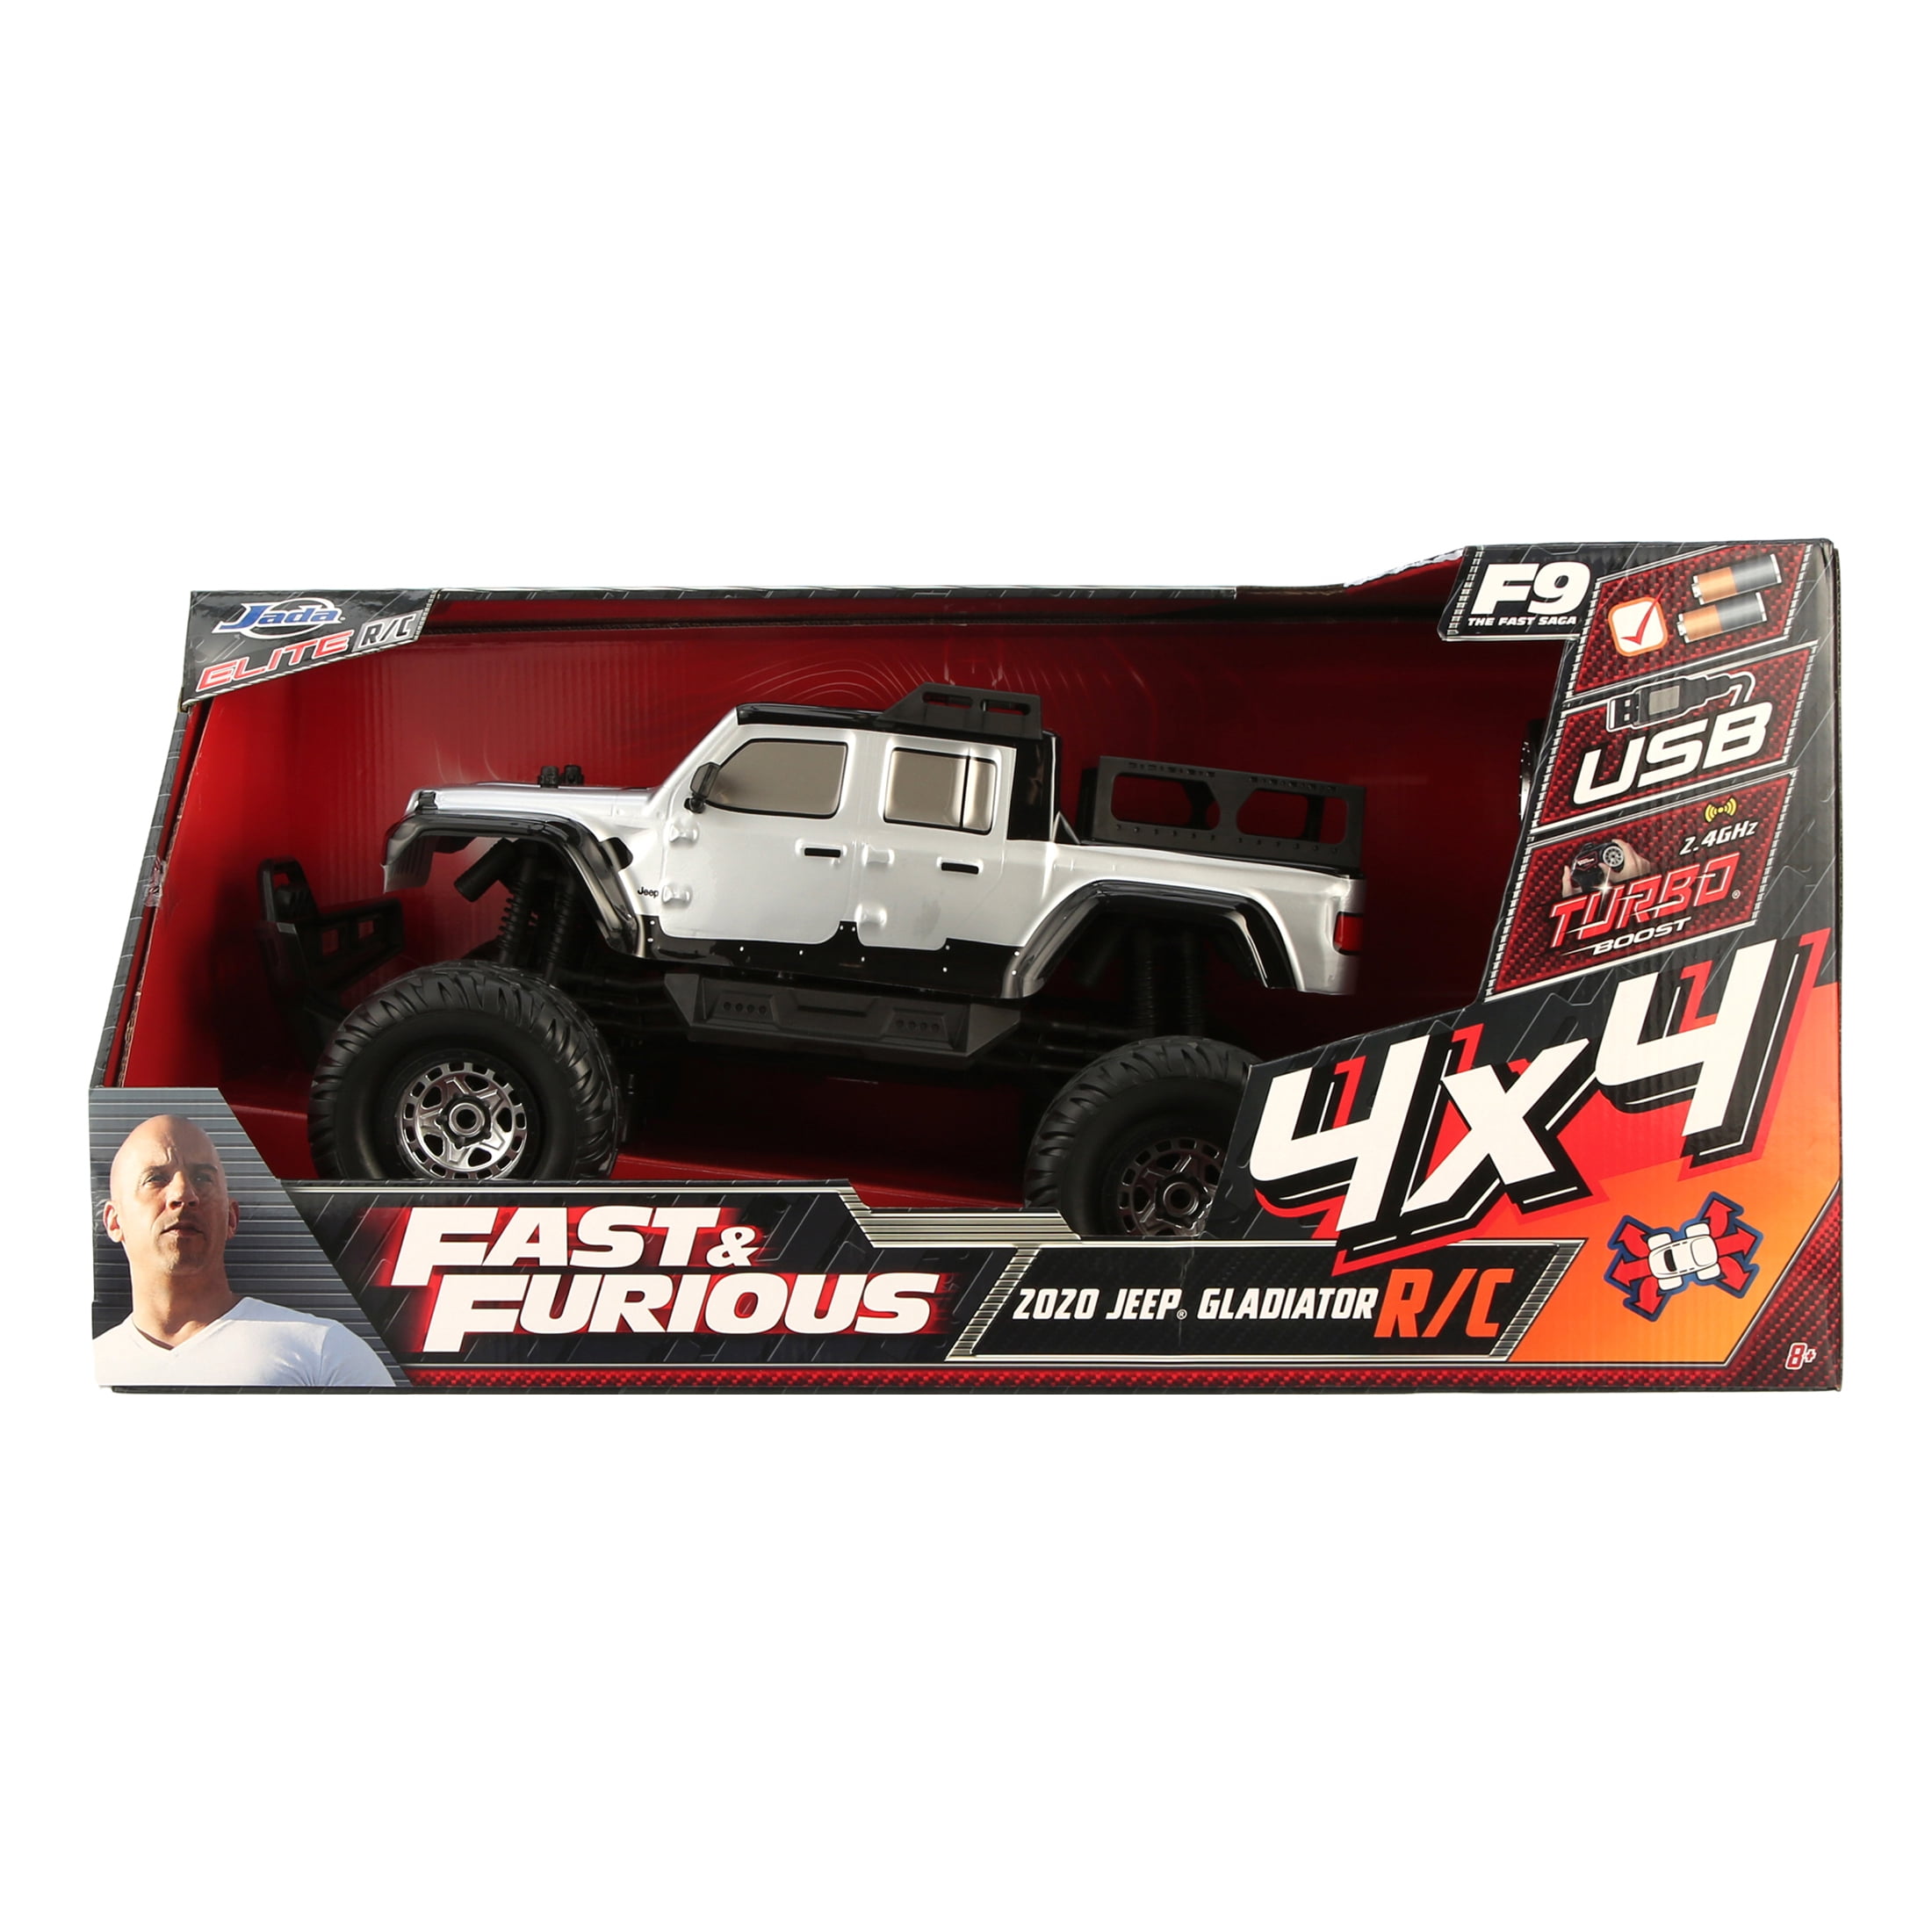 Hertog Mentor Ringlet Fast & Furious 4x4 Elite Jeep Gladiator 1:12 Radio Control Cars -  Walmart.com